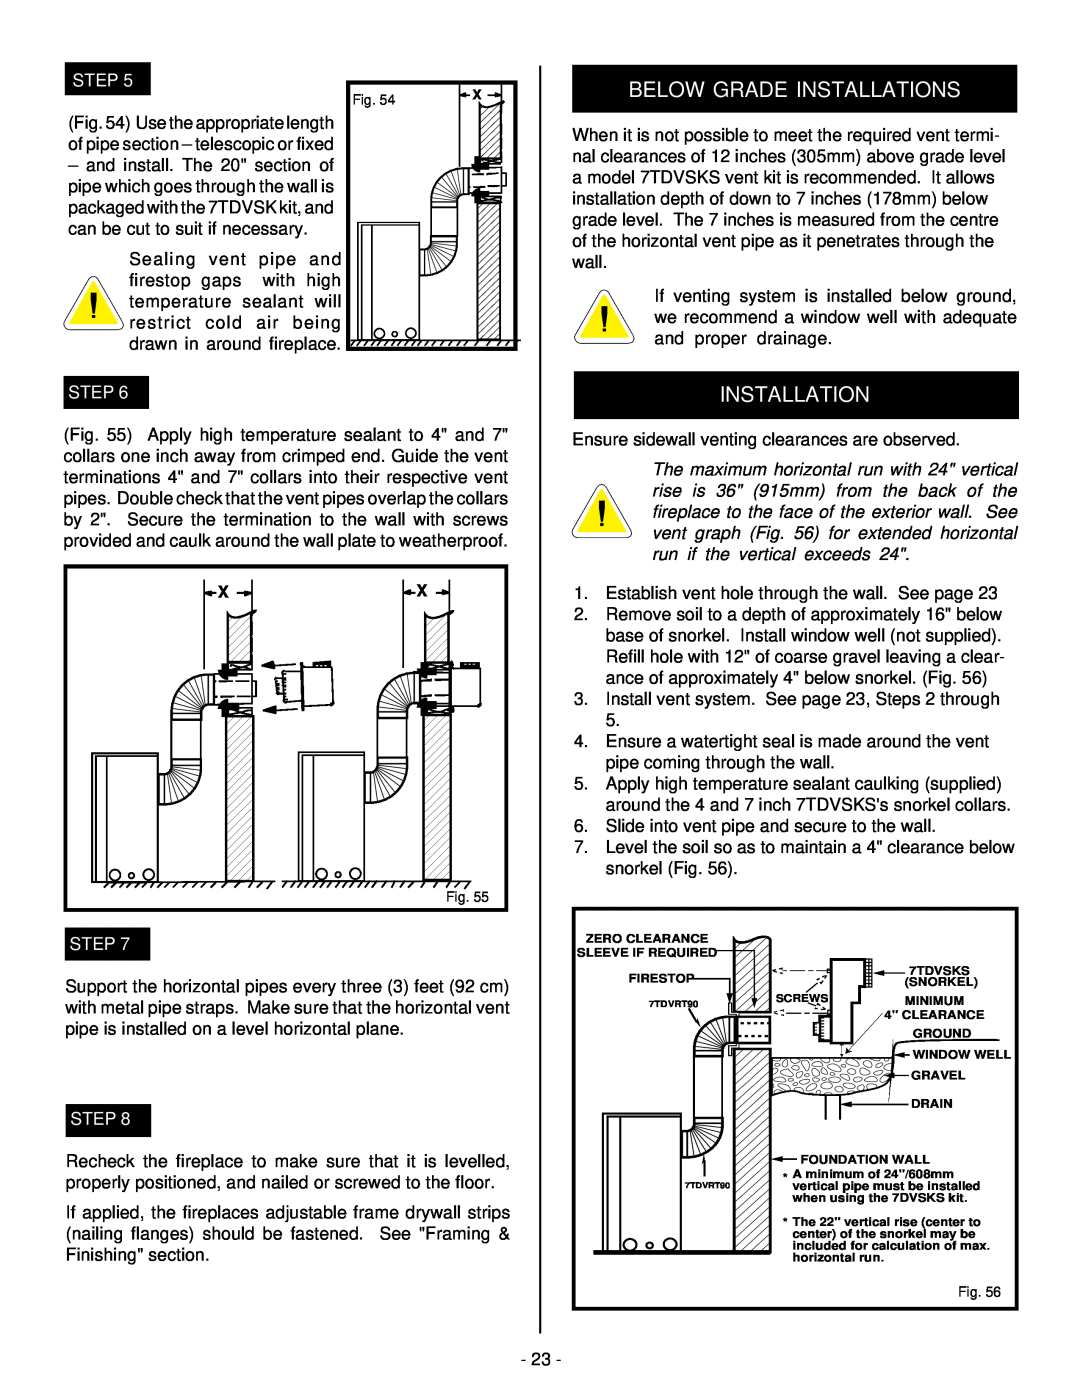 Vermont Casting BHDR36 installation instructions Below Grade Installations, Step 